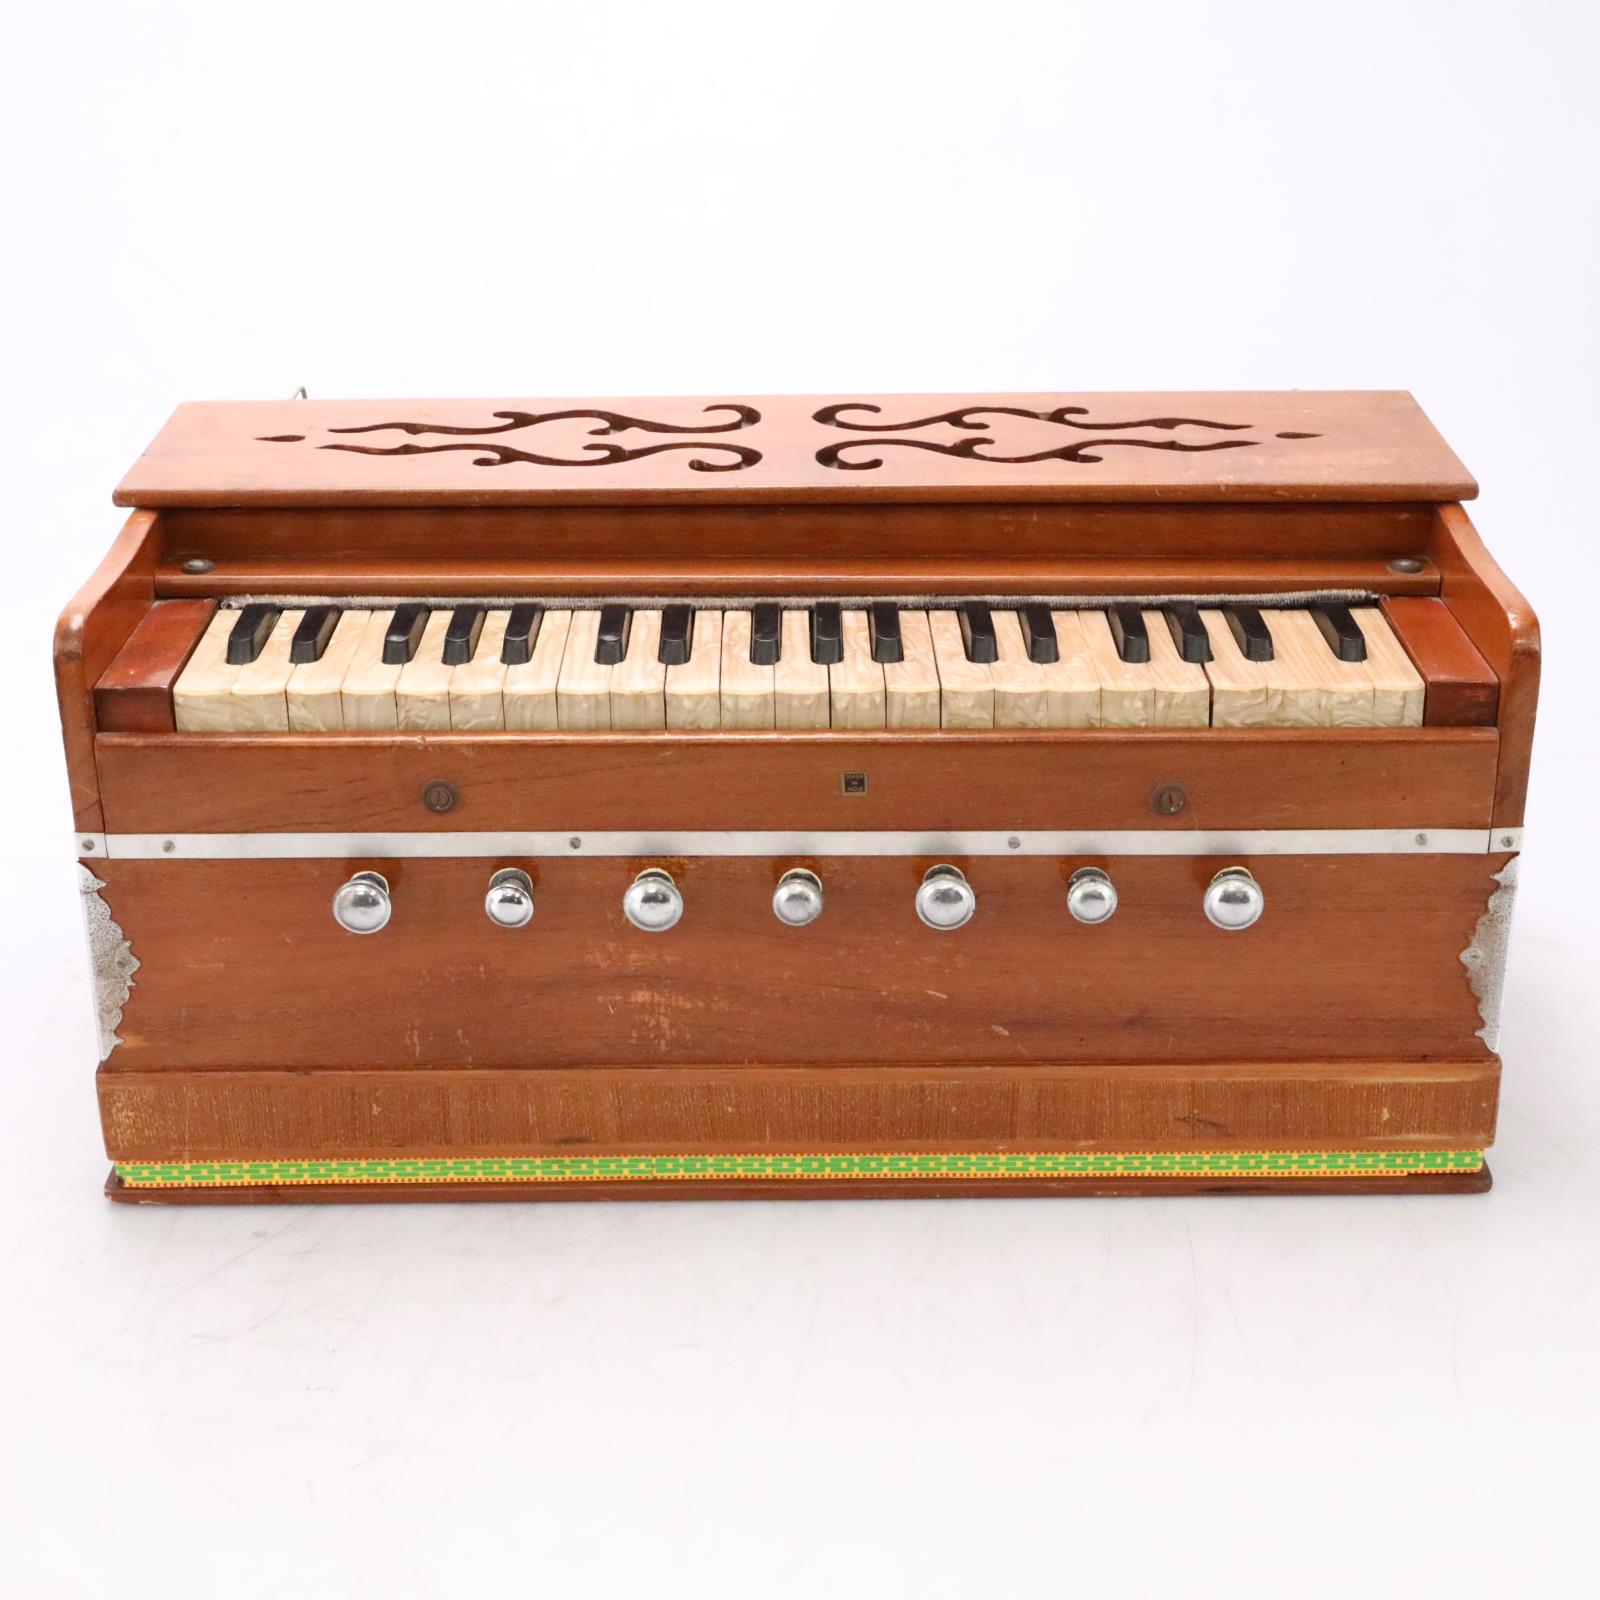 Harmonium 39-Key Wooden Pump Organ Keyboard #49722